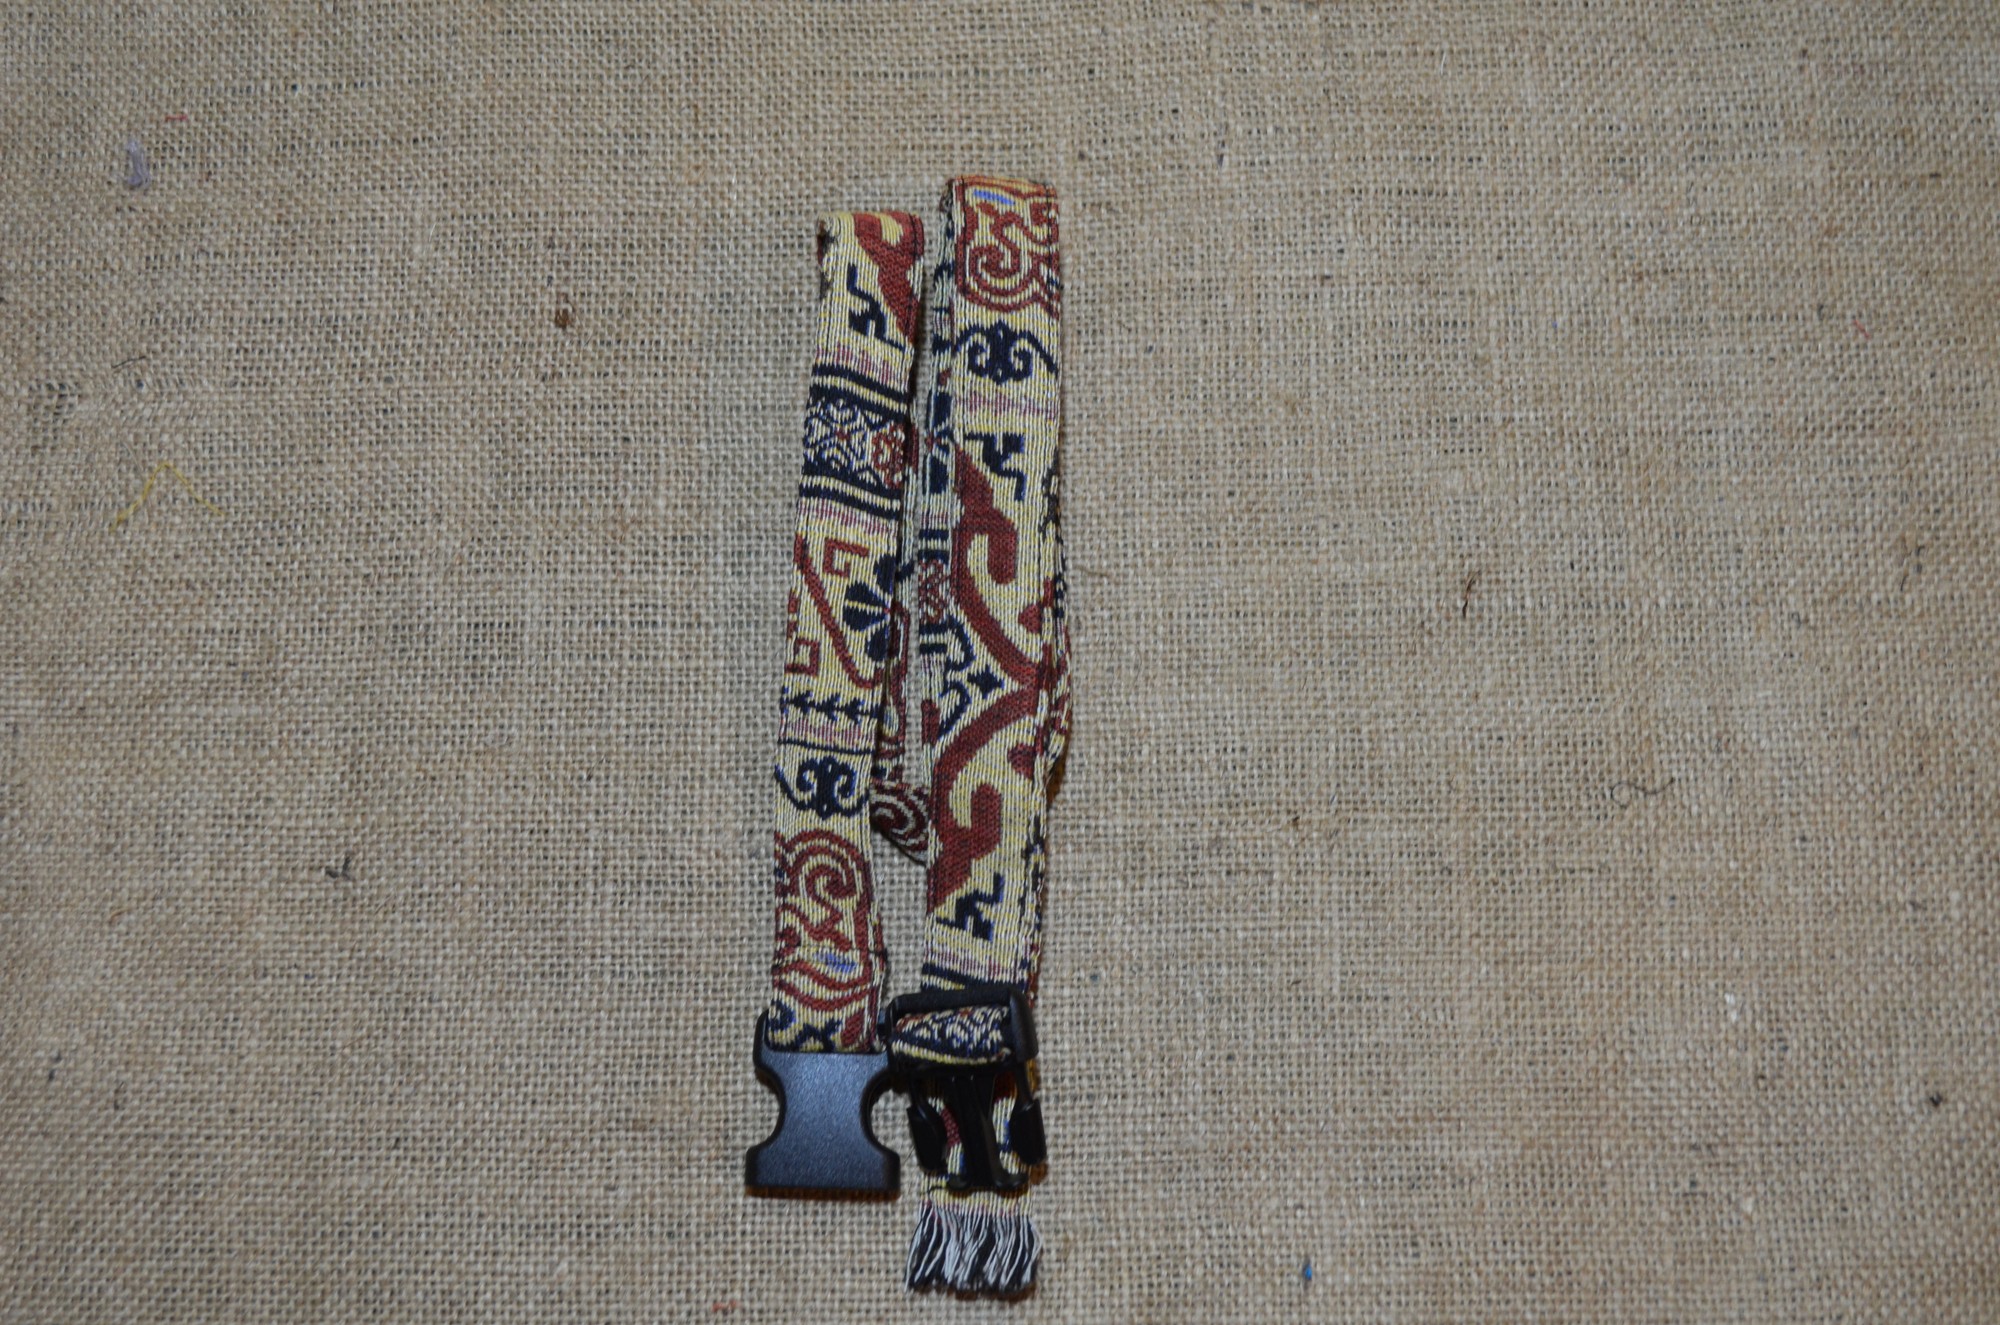 Handmade textile belt in ethnic style.